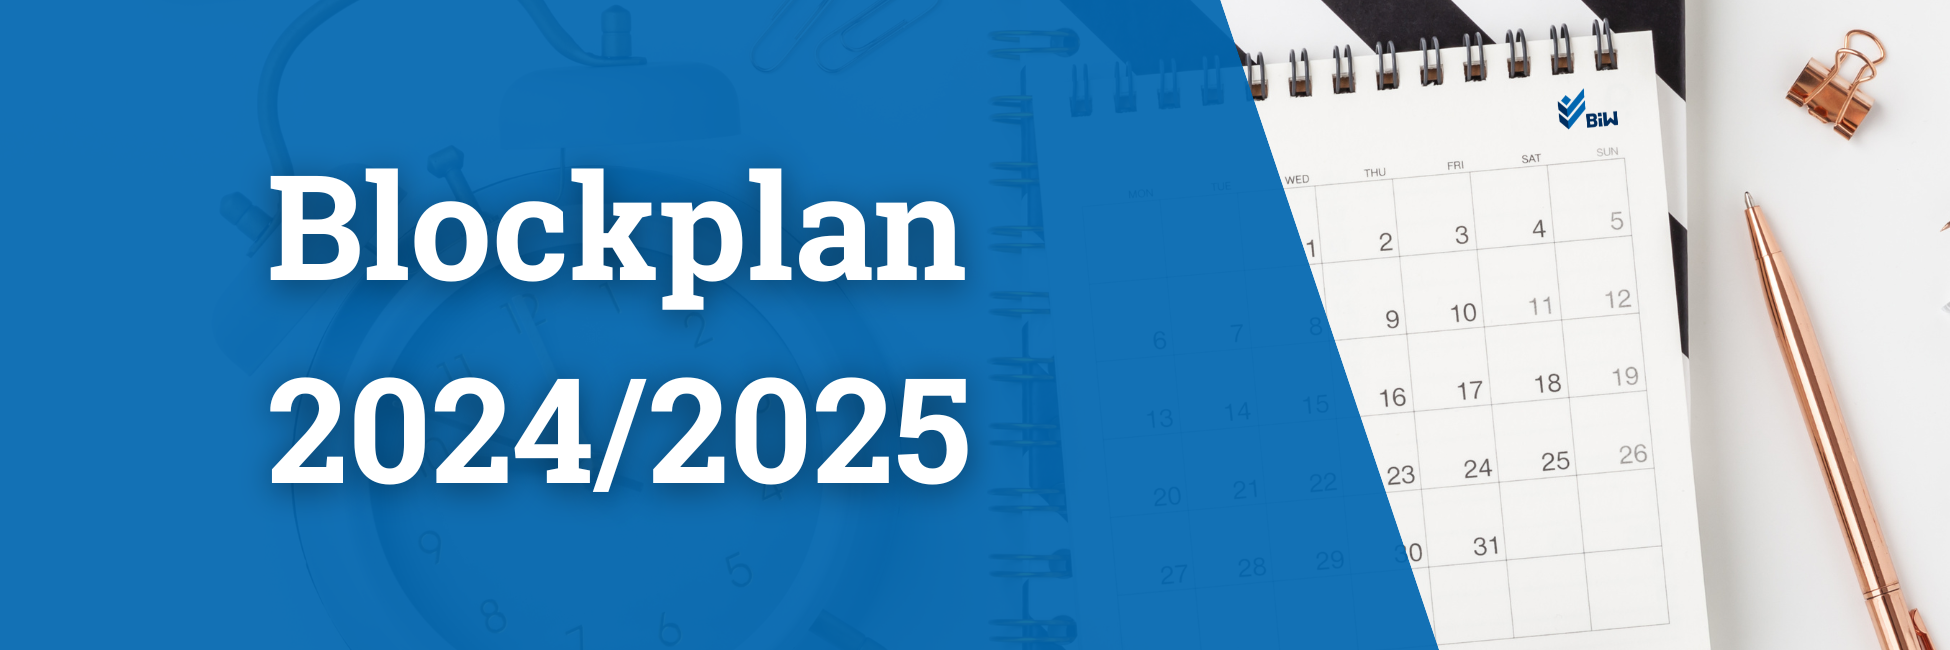 Blockplan 2023/2024